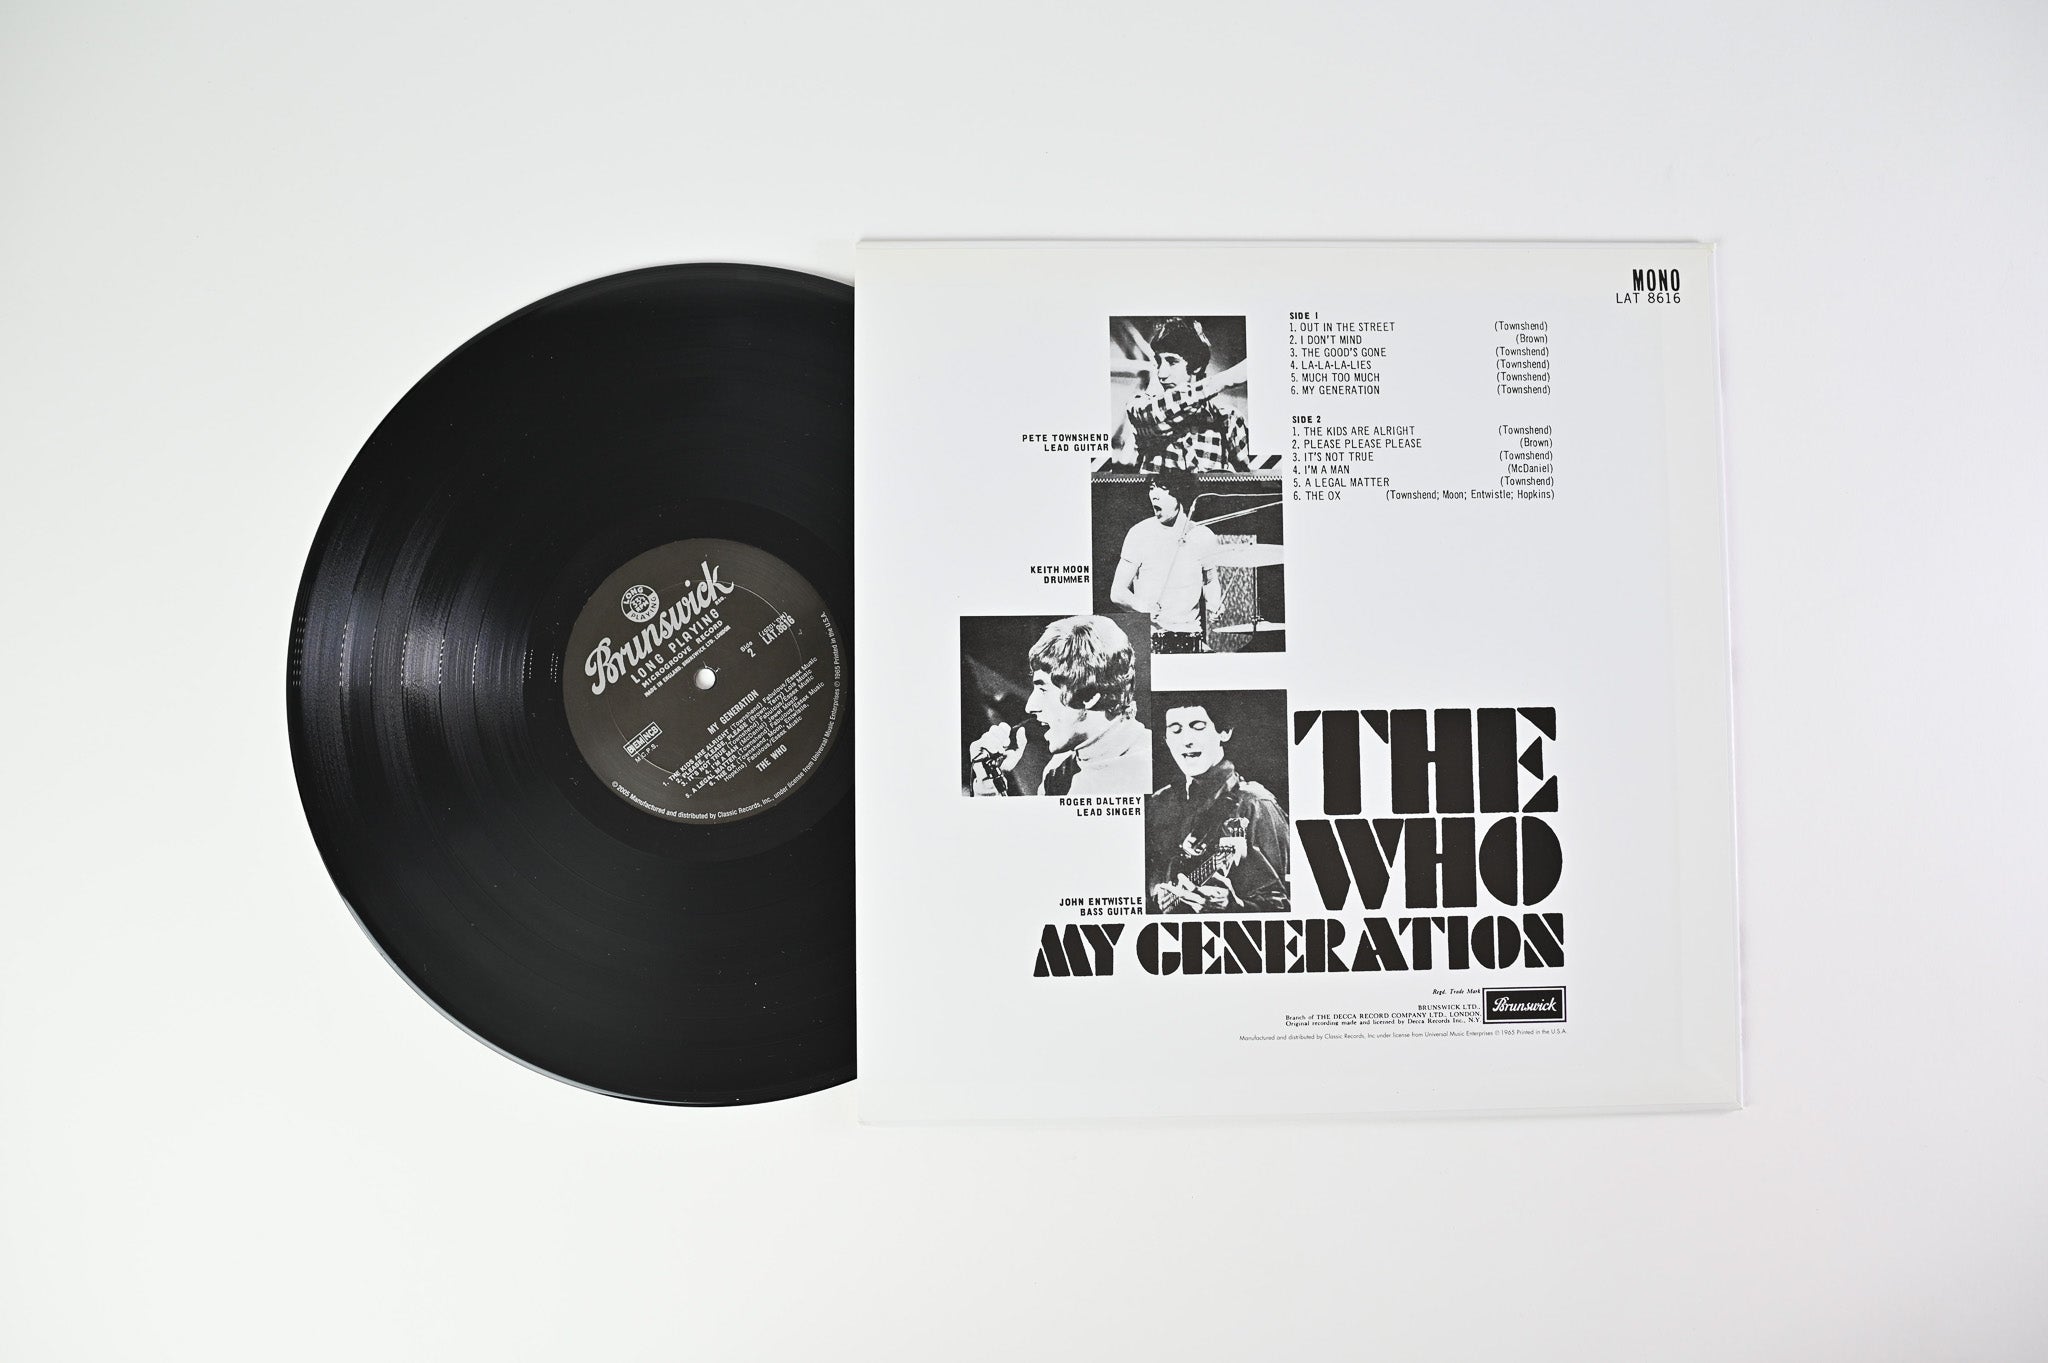 The Who - My Generation on Classic Records/Brunswick Reissue 200g Quiex SV-P